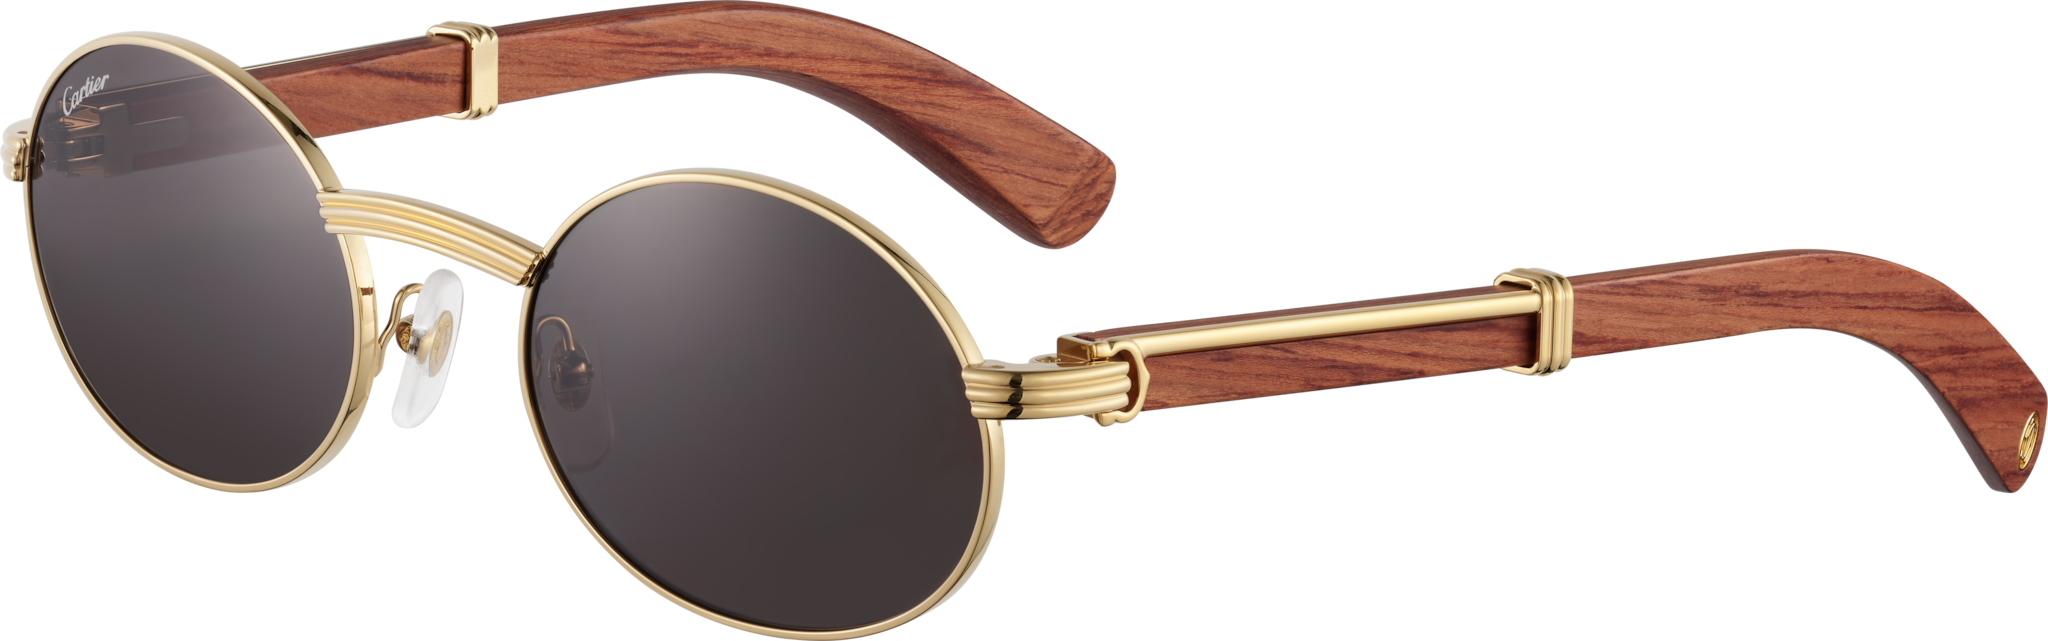 Première de Cartier SunglassesSmooth gold and platinum finish metal, brown wood, grey glass